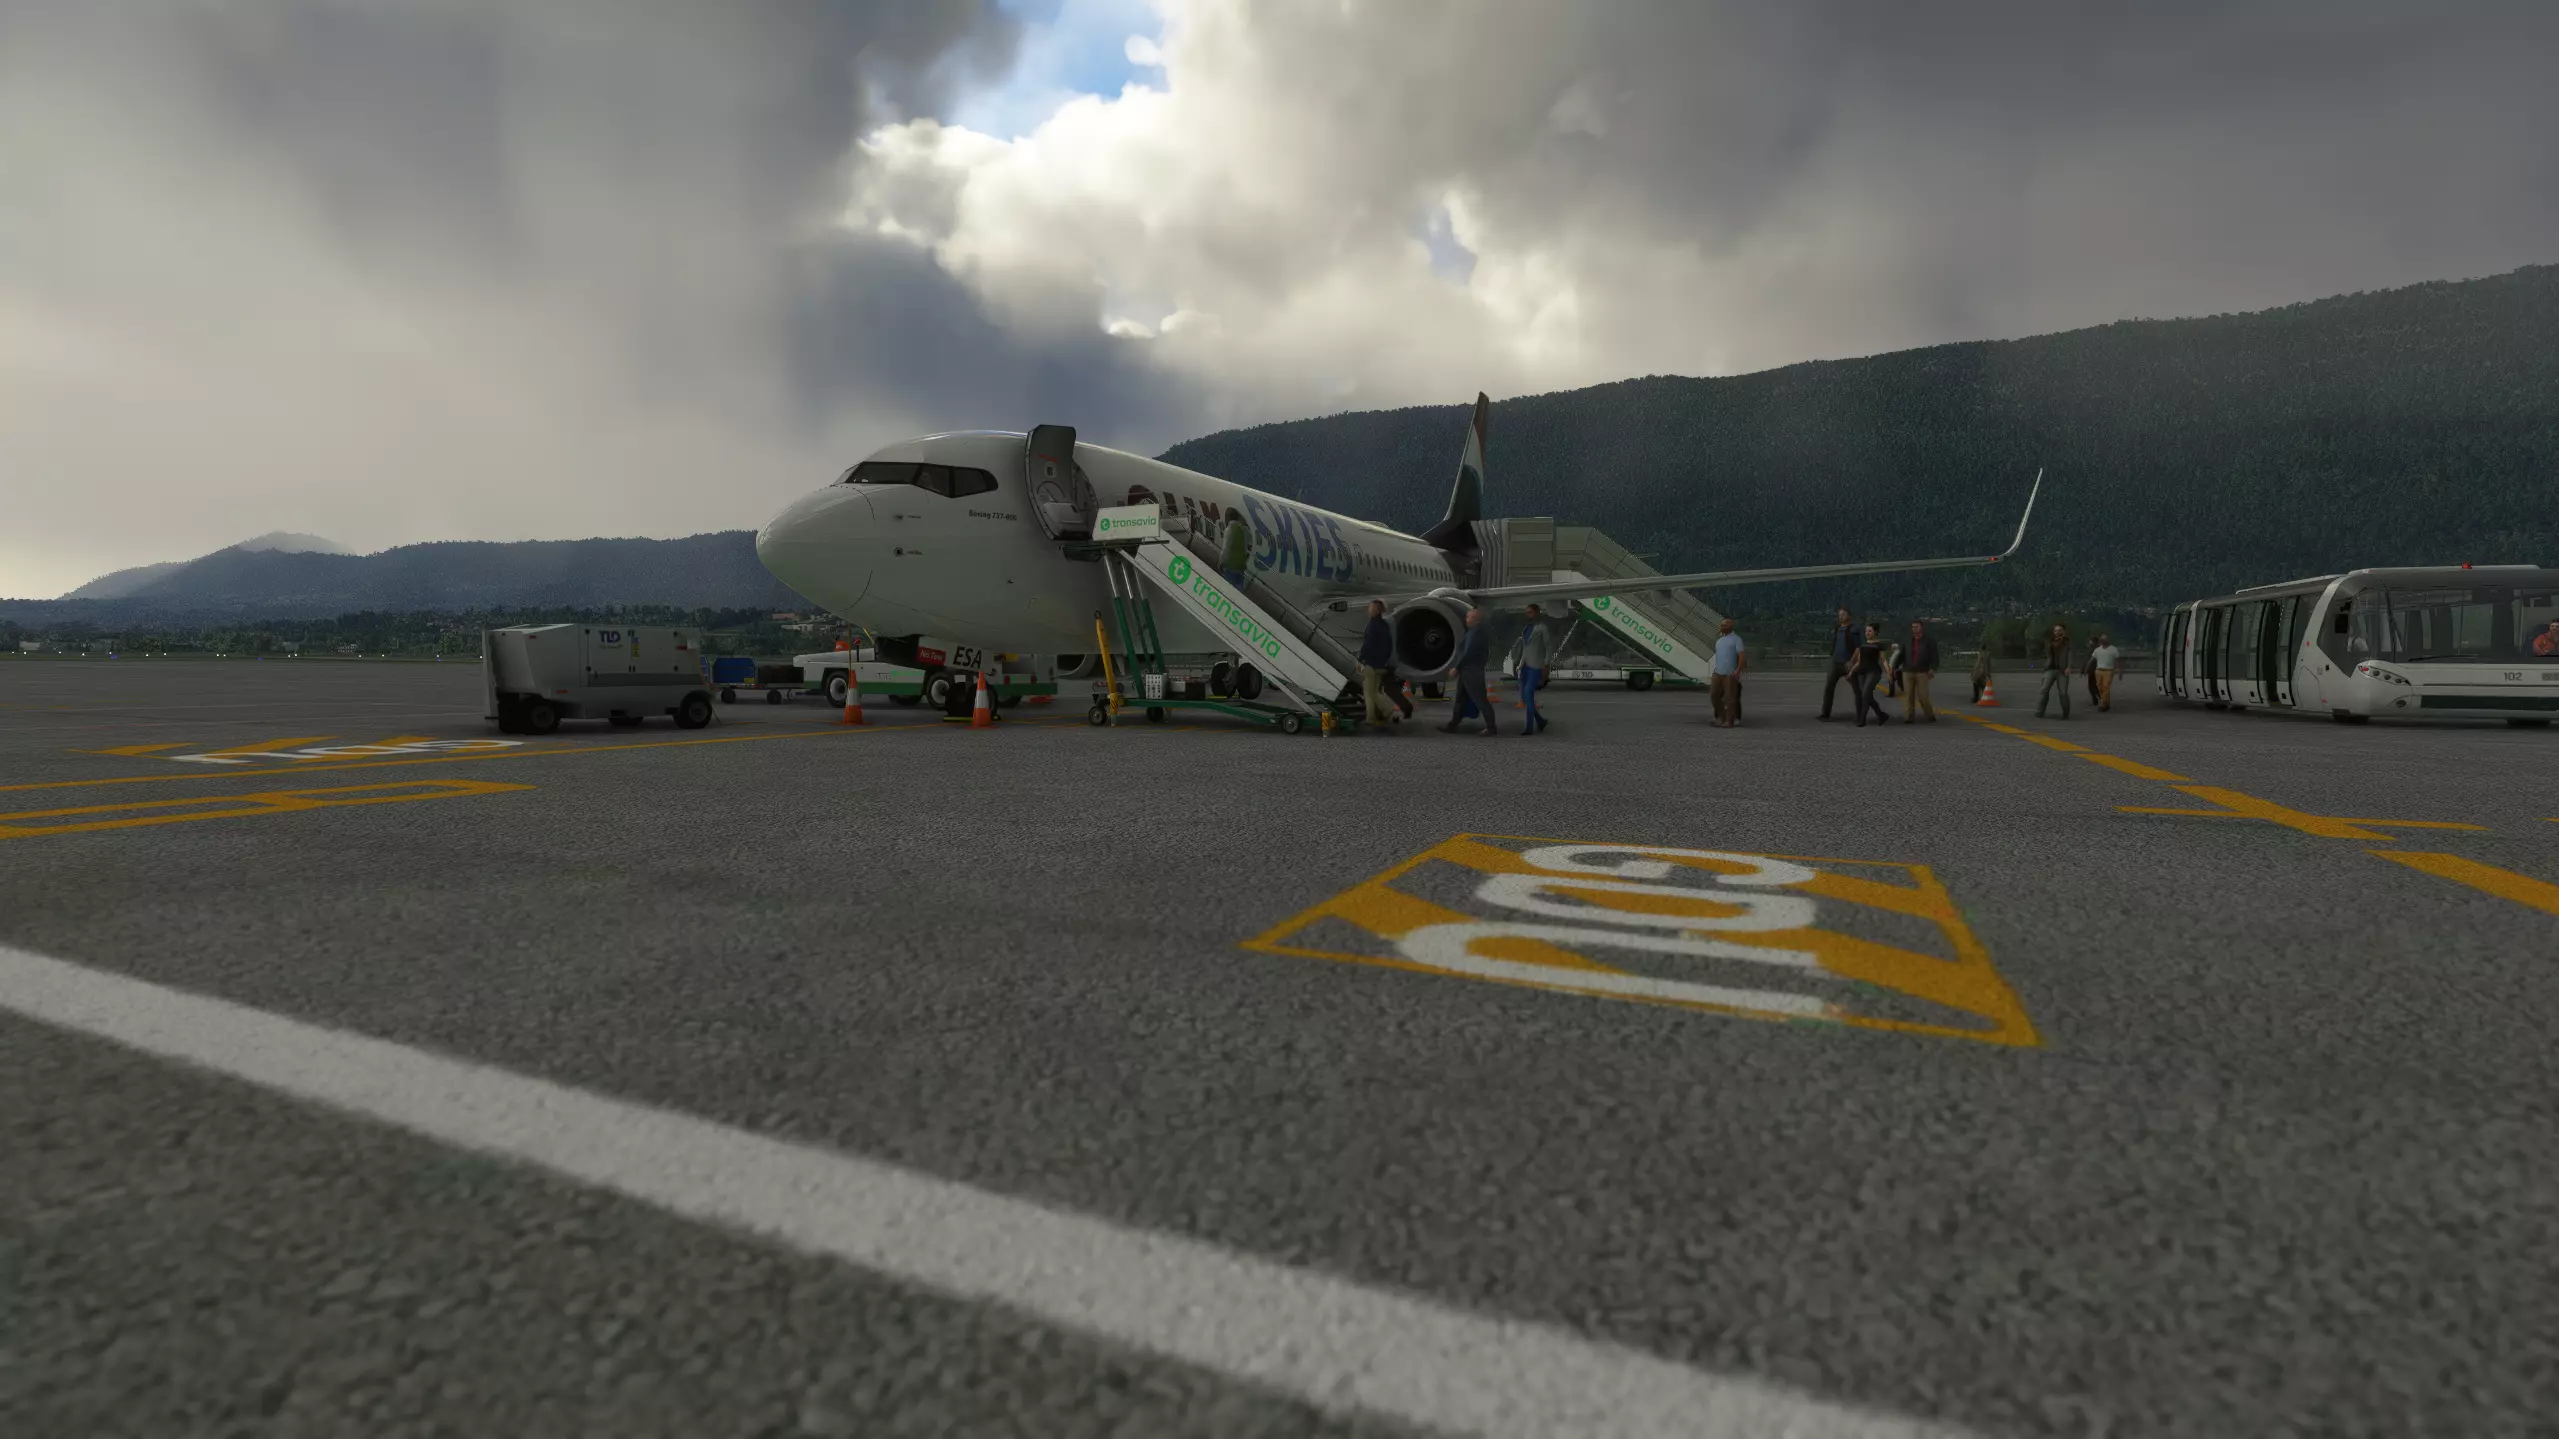 euroSKIES member boarding plane on ground